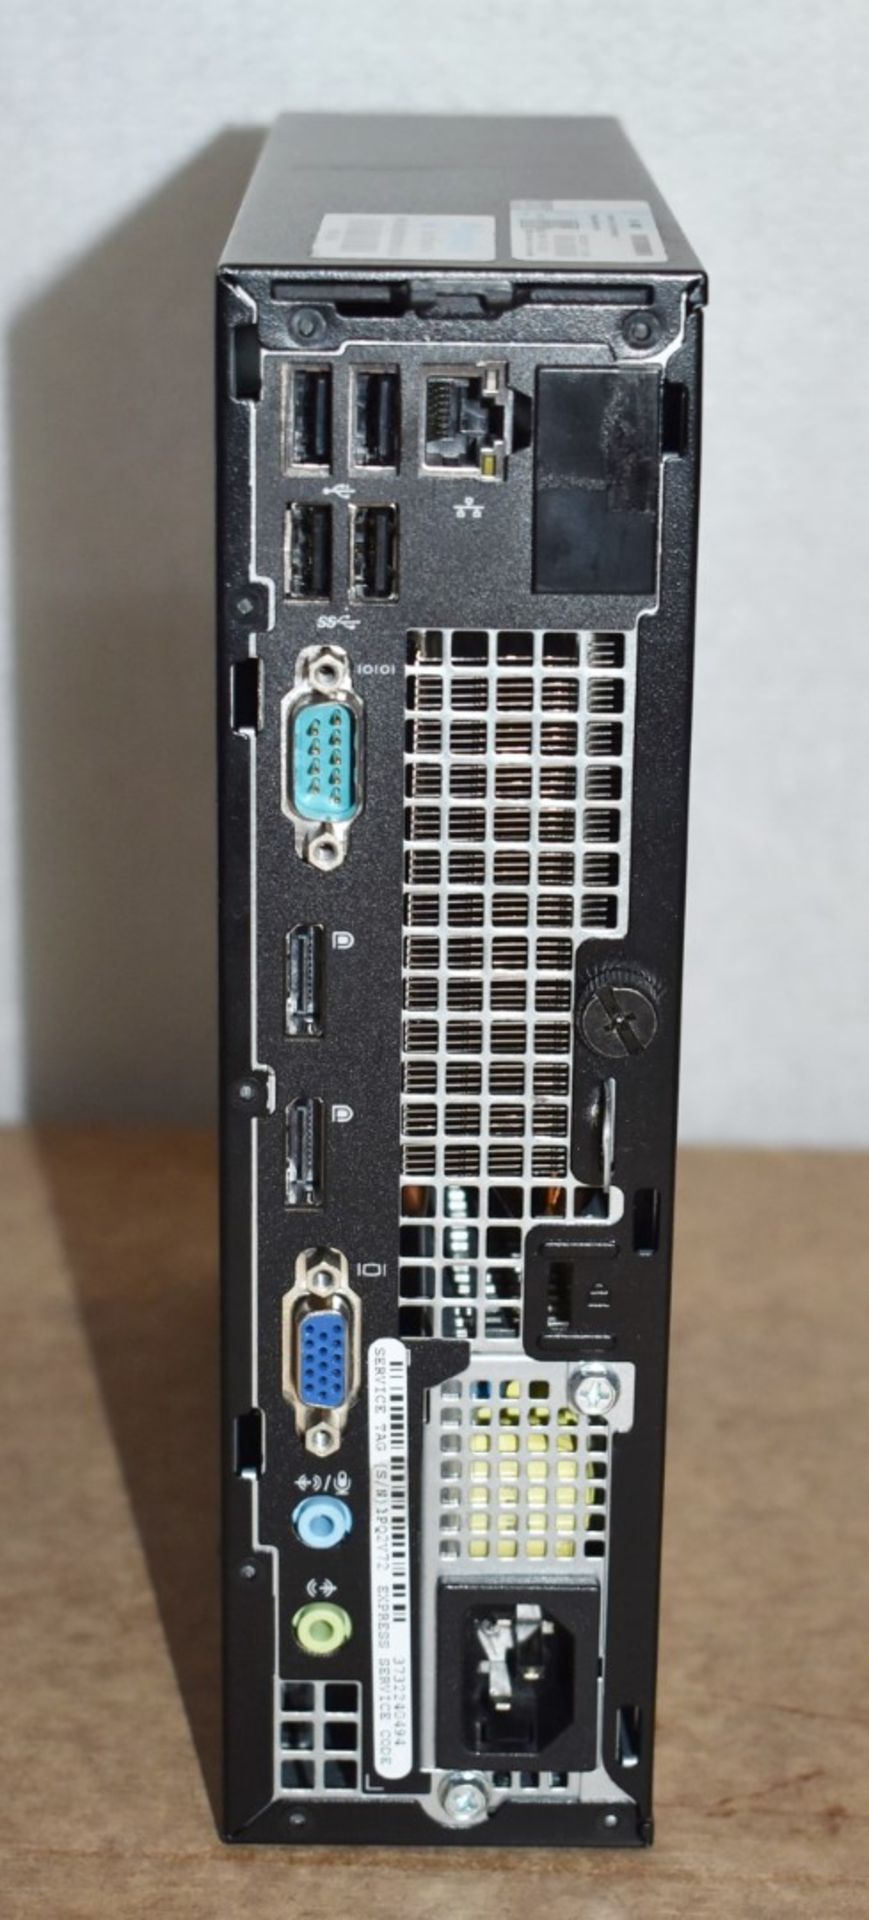 1 x Dell Optiplex 9020 Small Form Fact Desktop Computer - Features an Intel i5-4590S Quad Core - Image 4 of 4